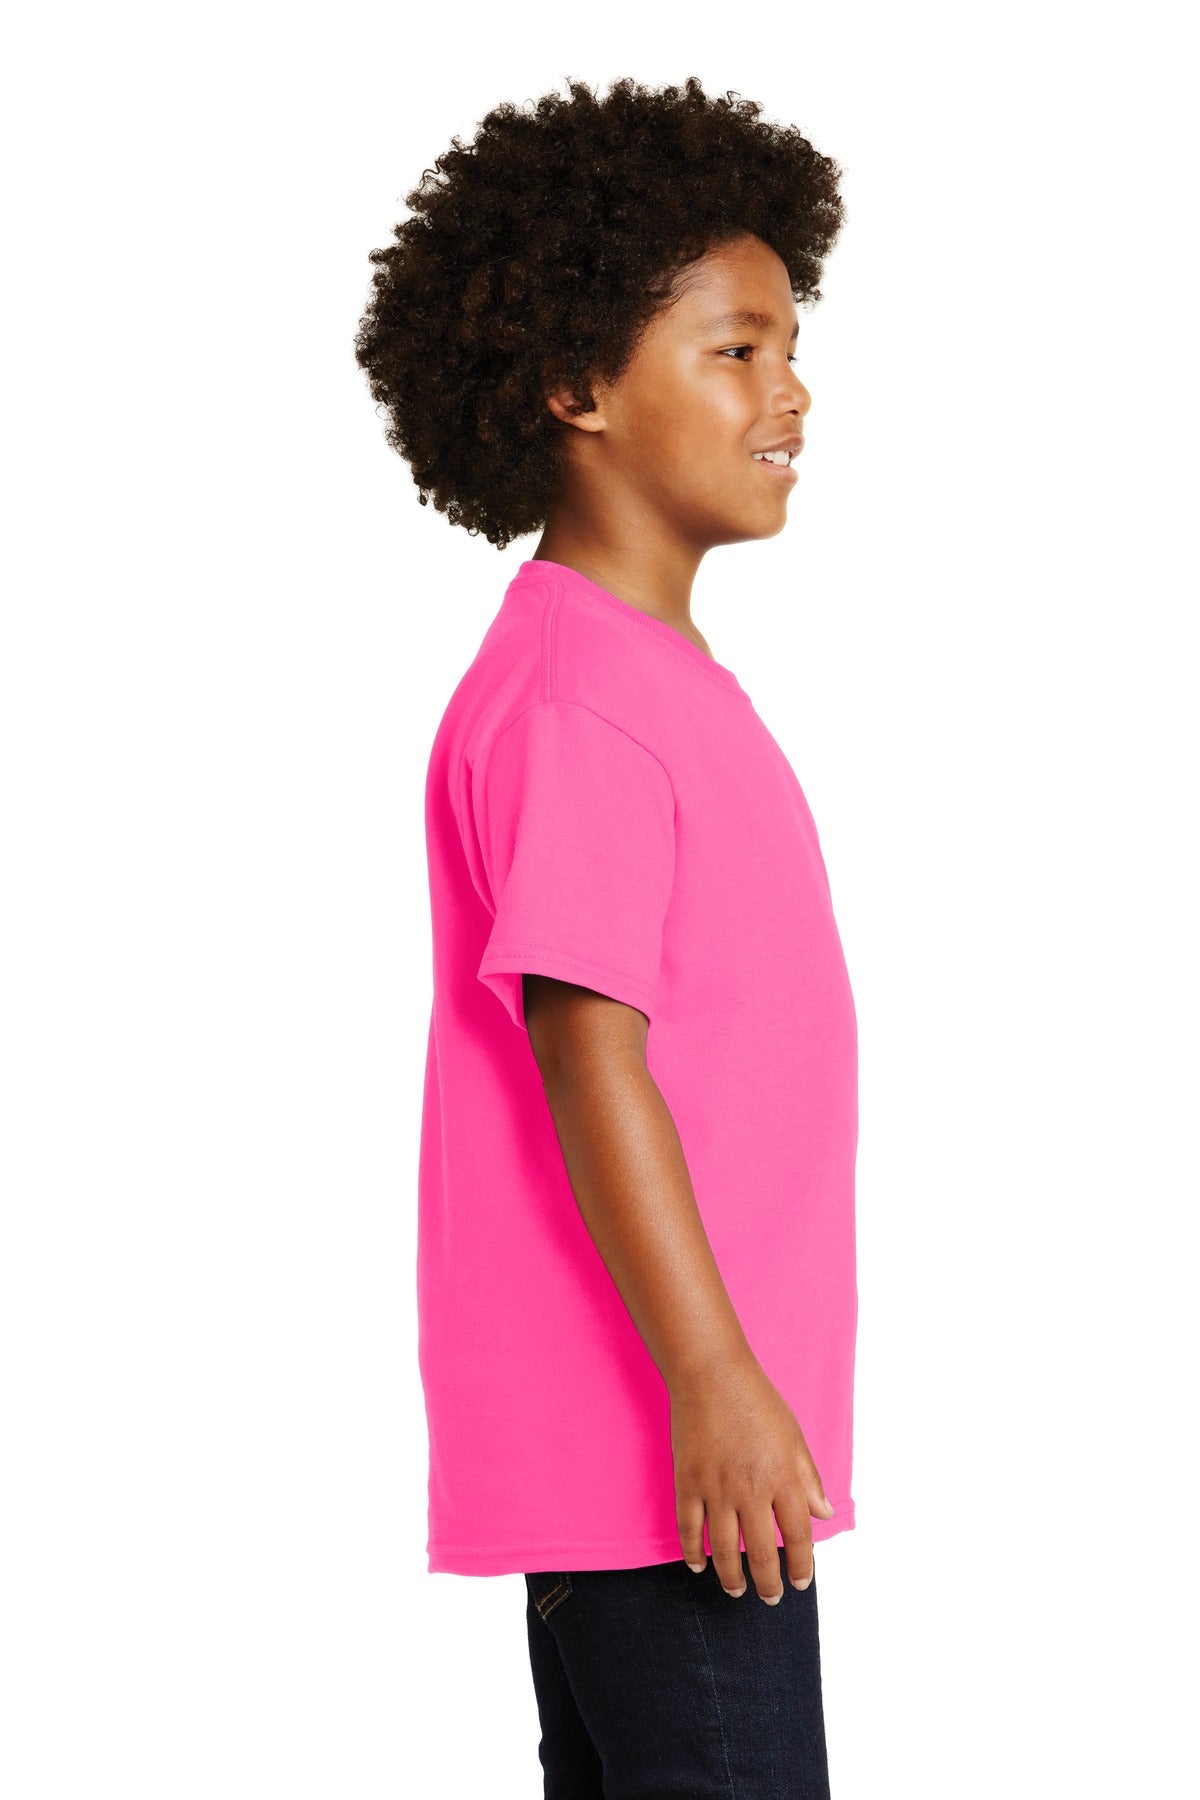 Gildan - Youth Ultra Cotton 100% US Cotton T-Shirt. 2000B - Safety Pink